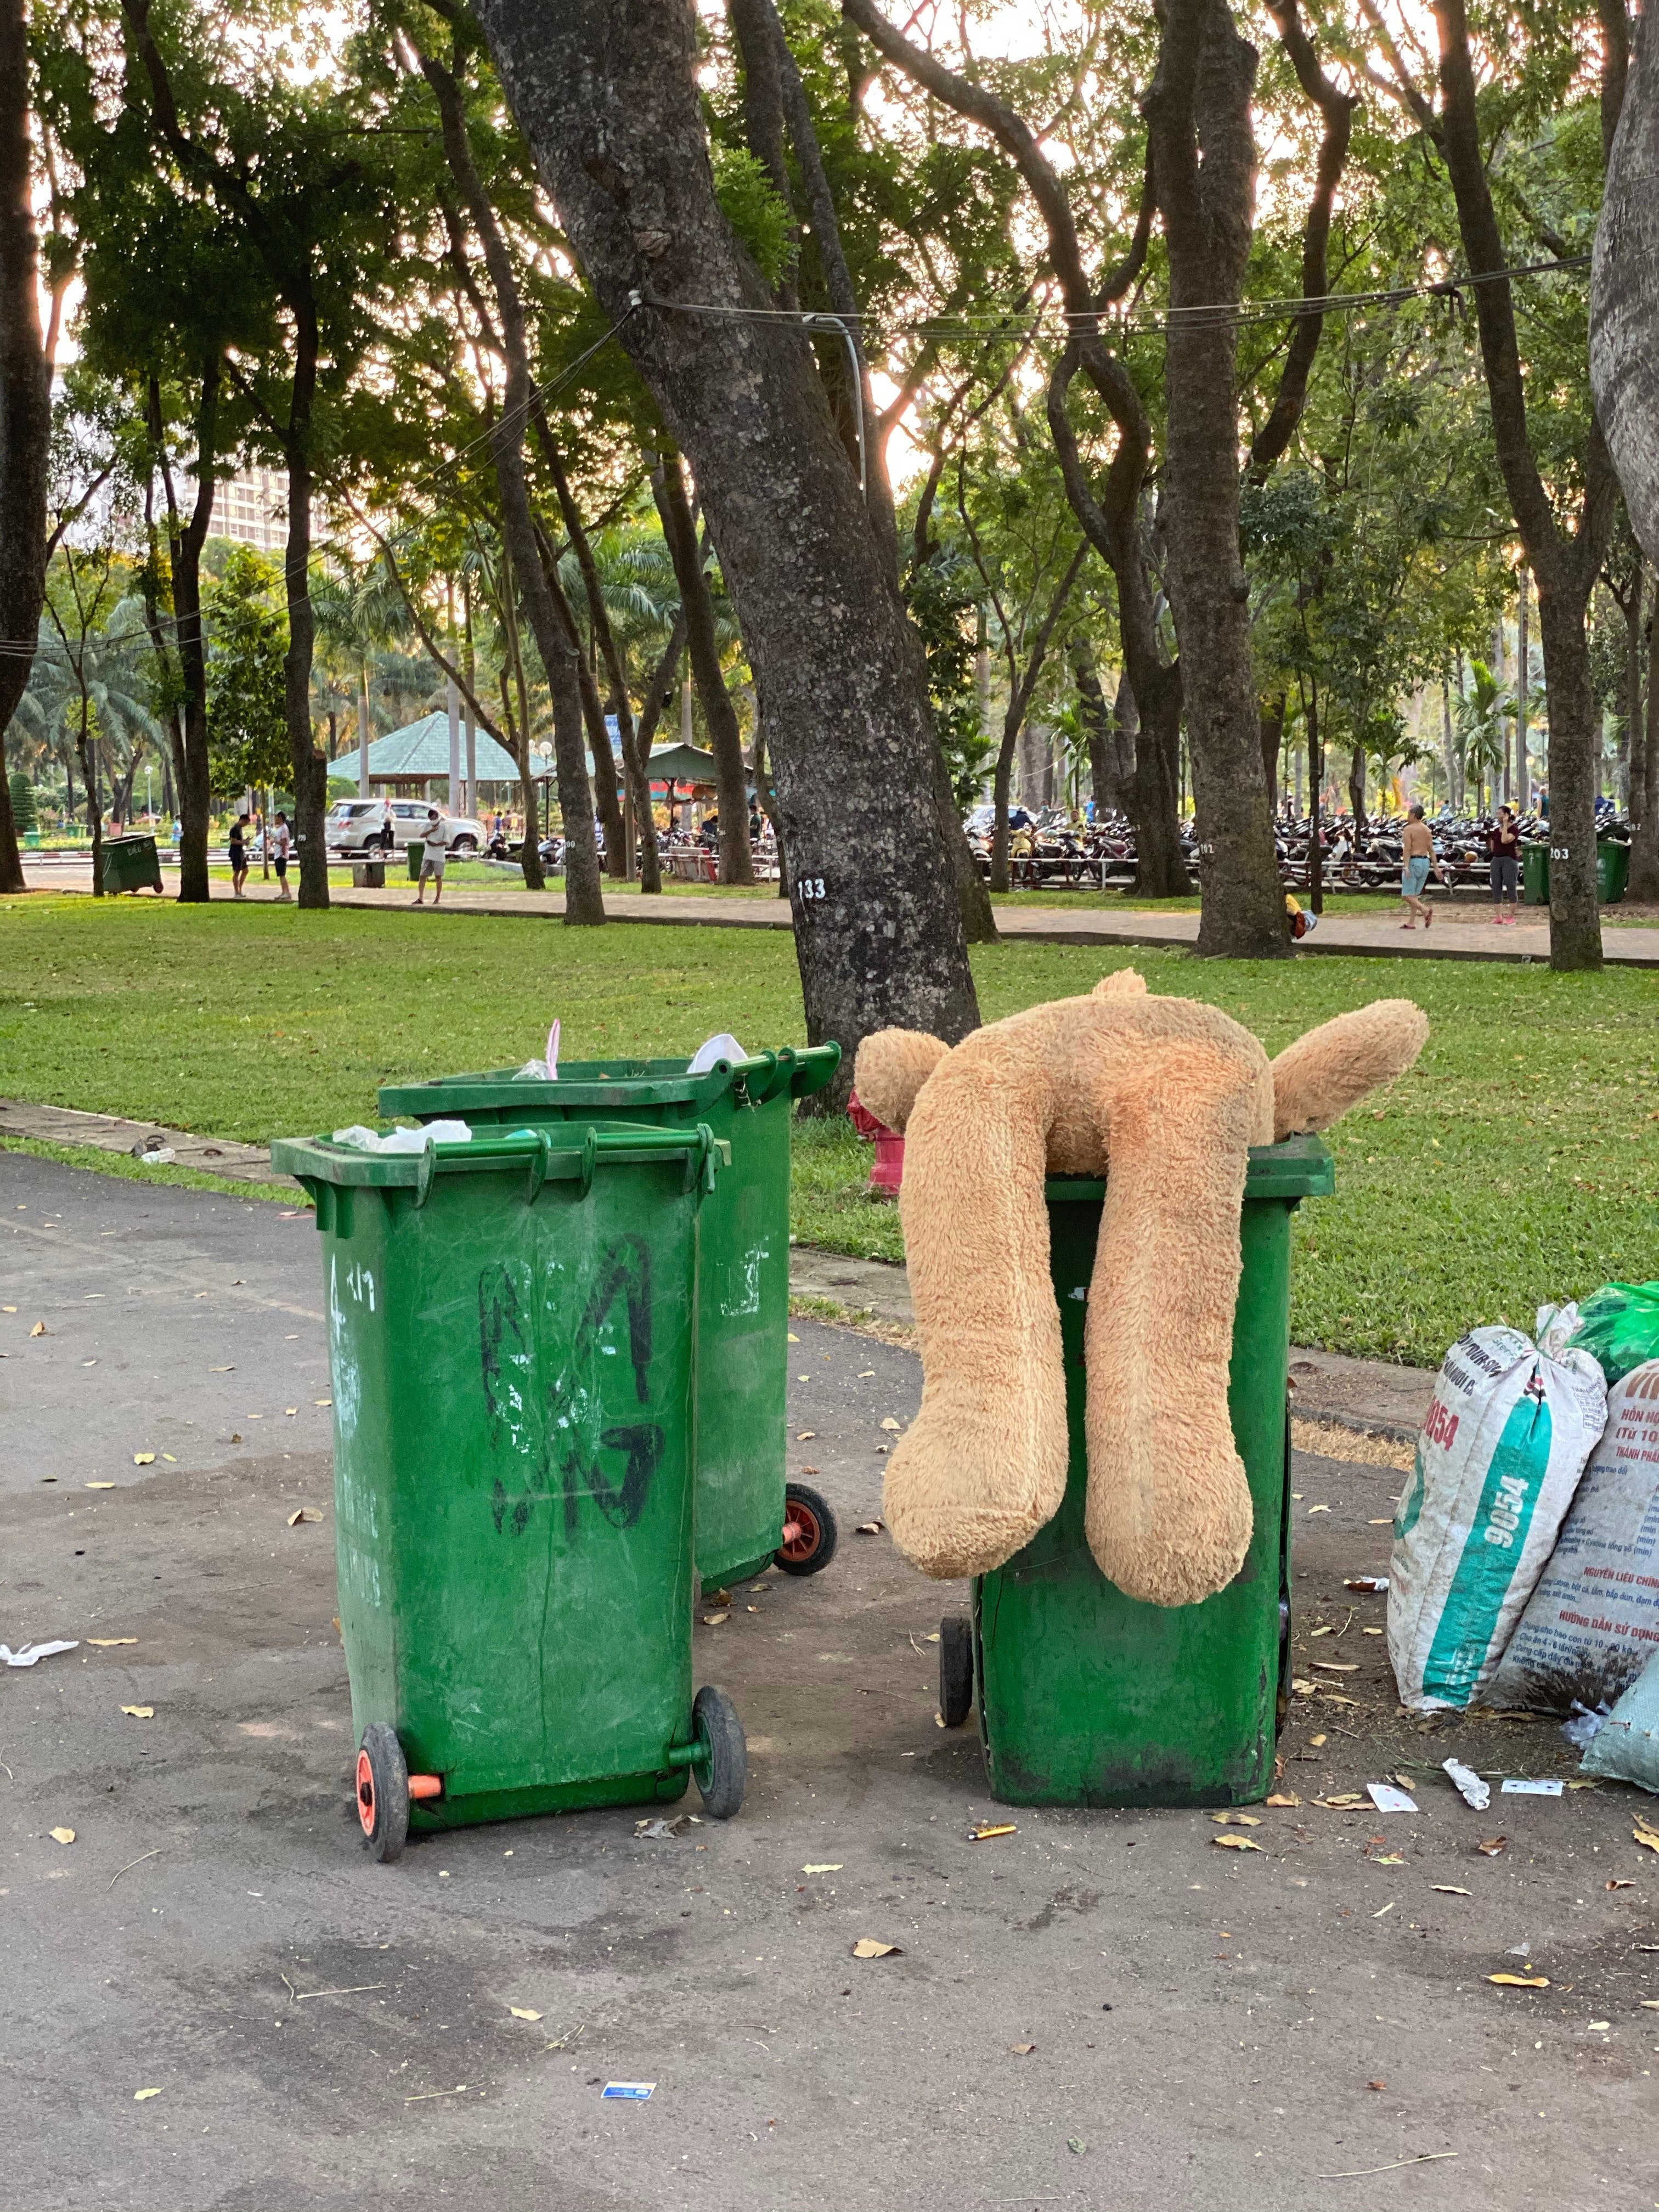 Un oso de peluche enorme en un contenedor de basura. | Foto: Pexels